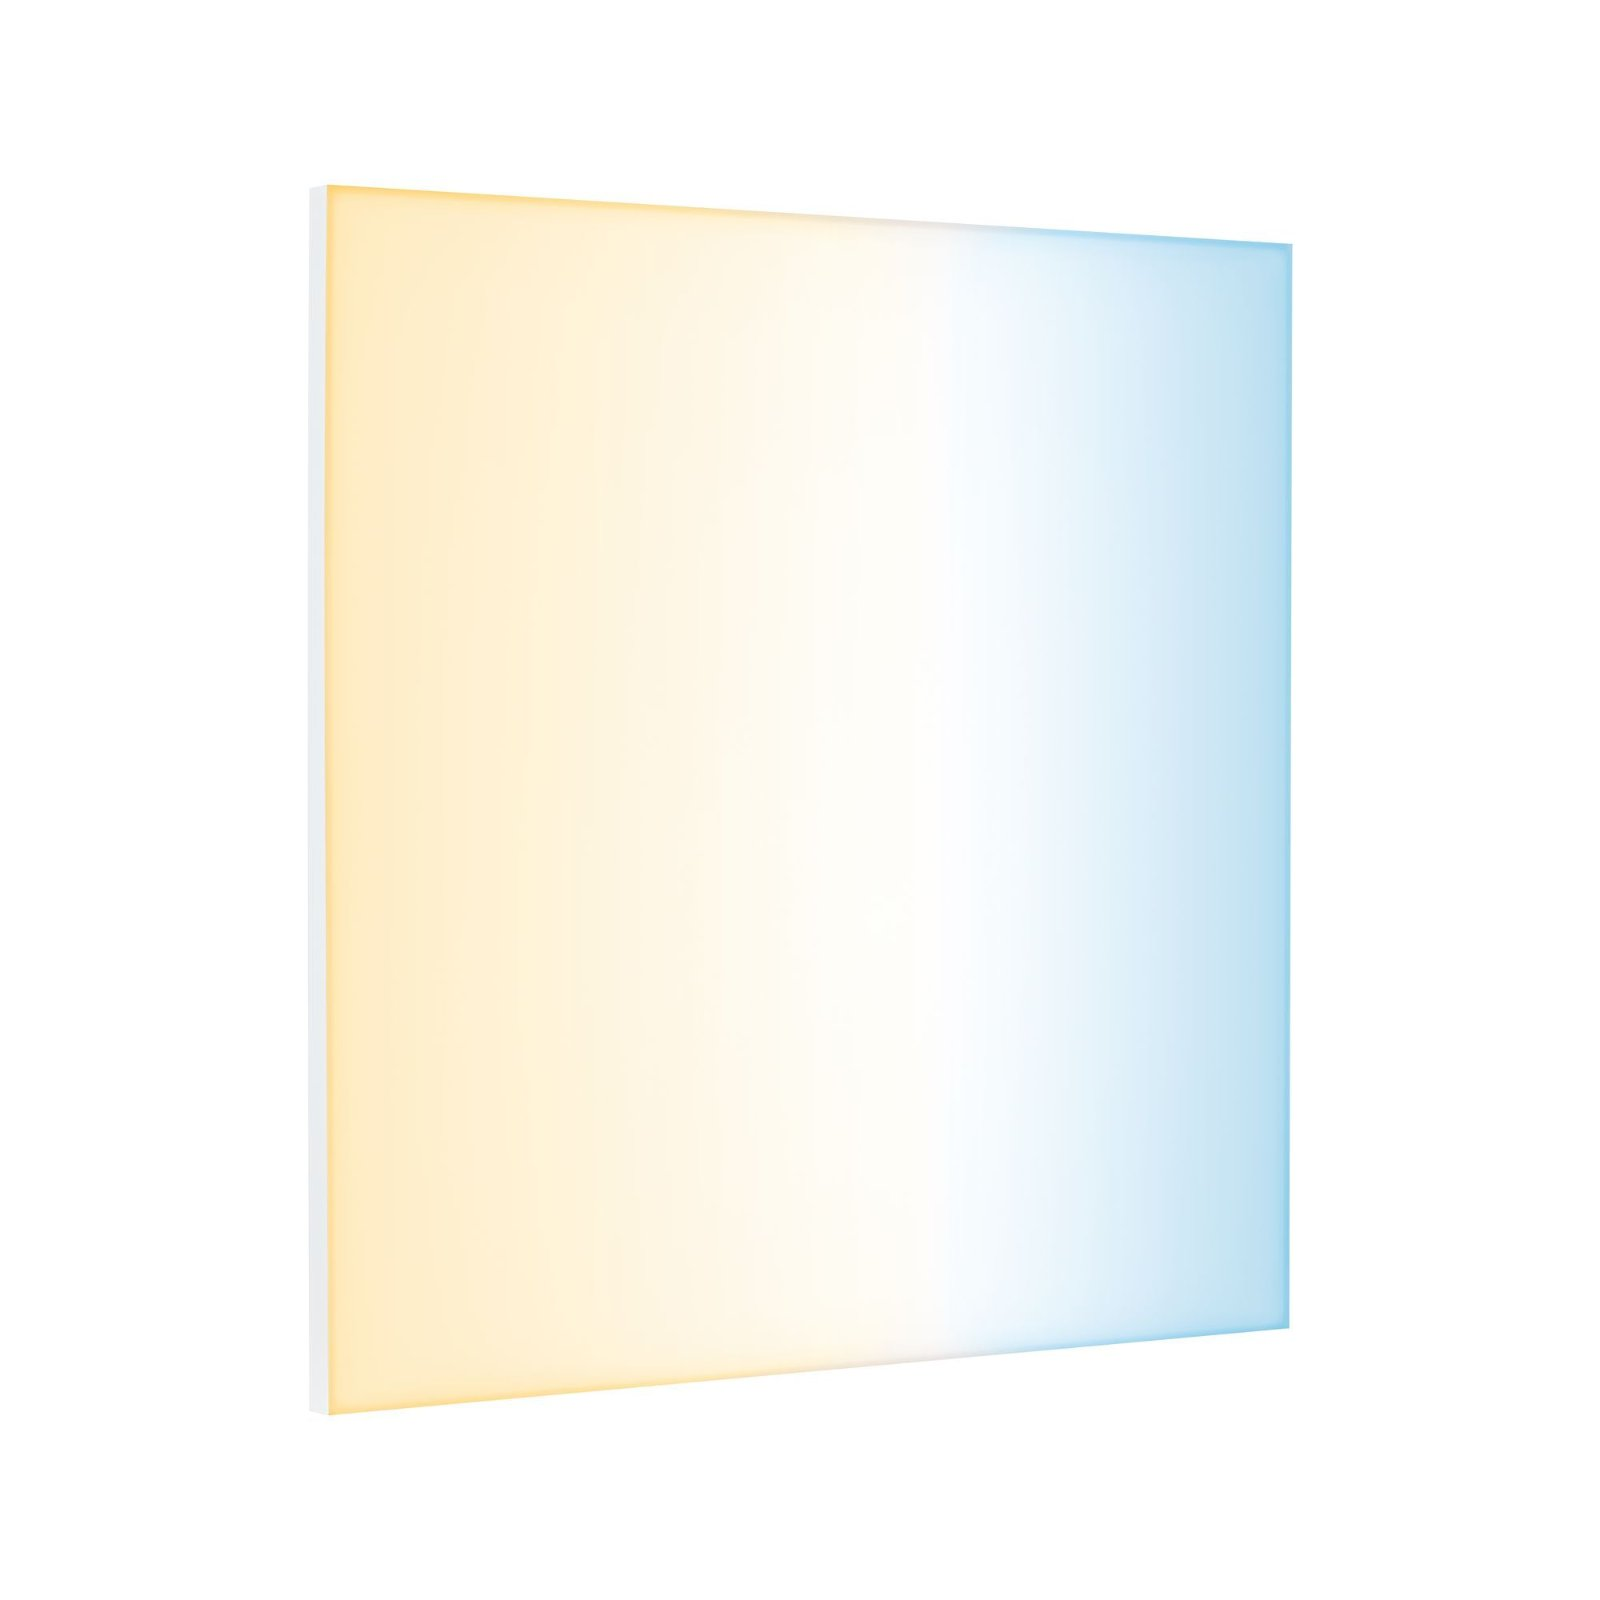 PAULMANN LICHT Velora (79826) White Panel LED Tunable